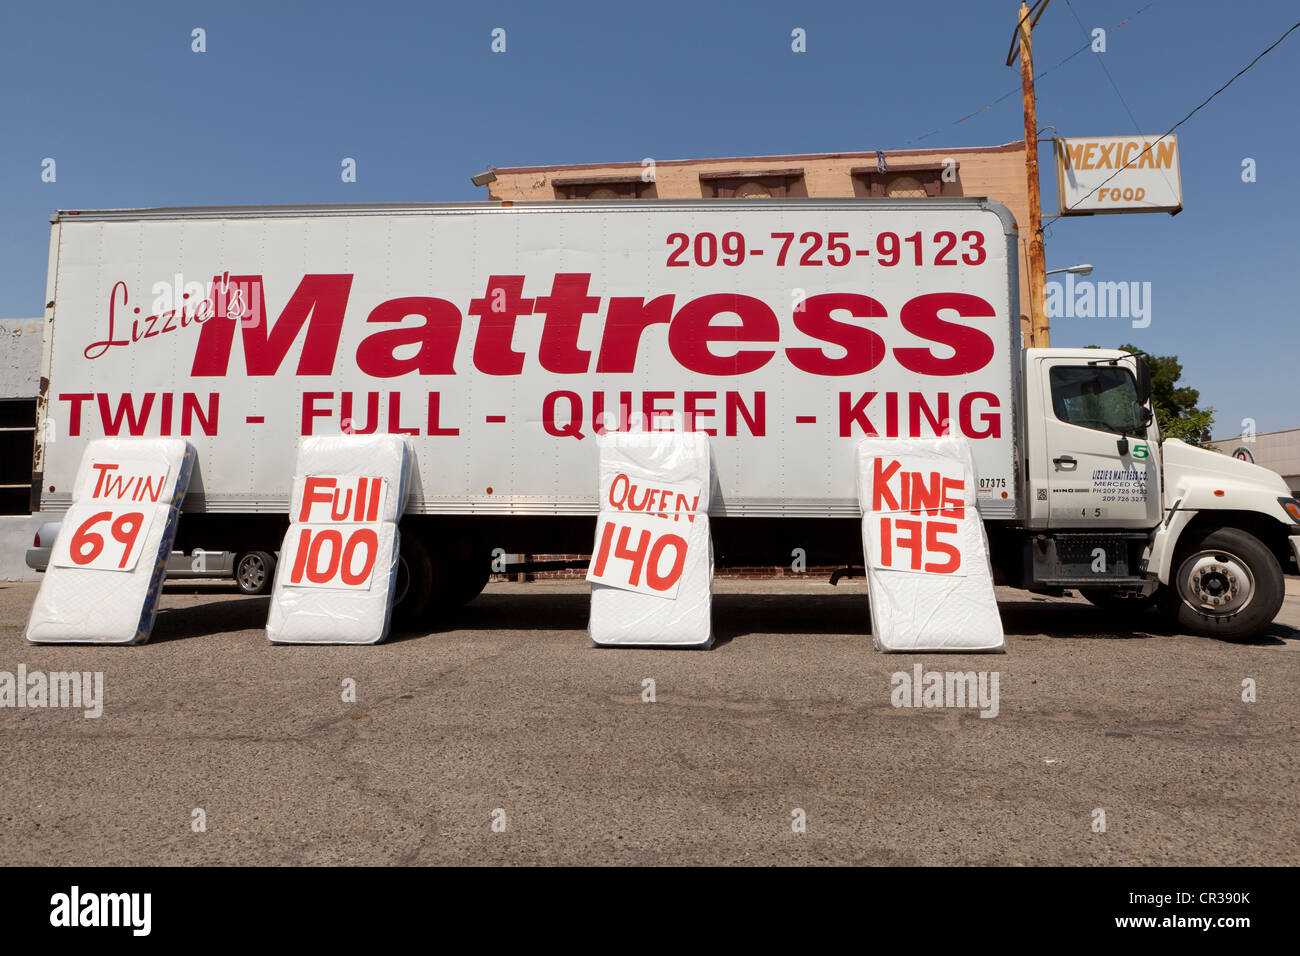 Mattress sale ad on truck Stock Photo